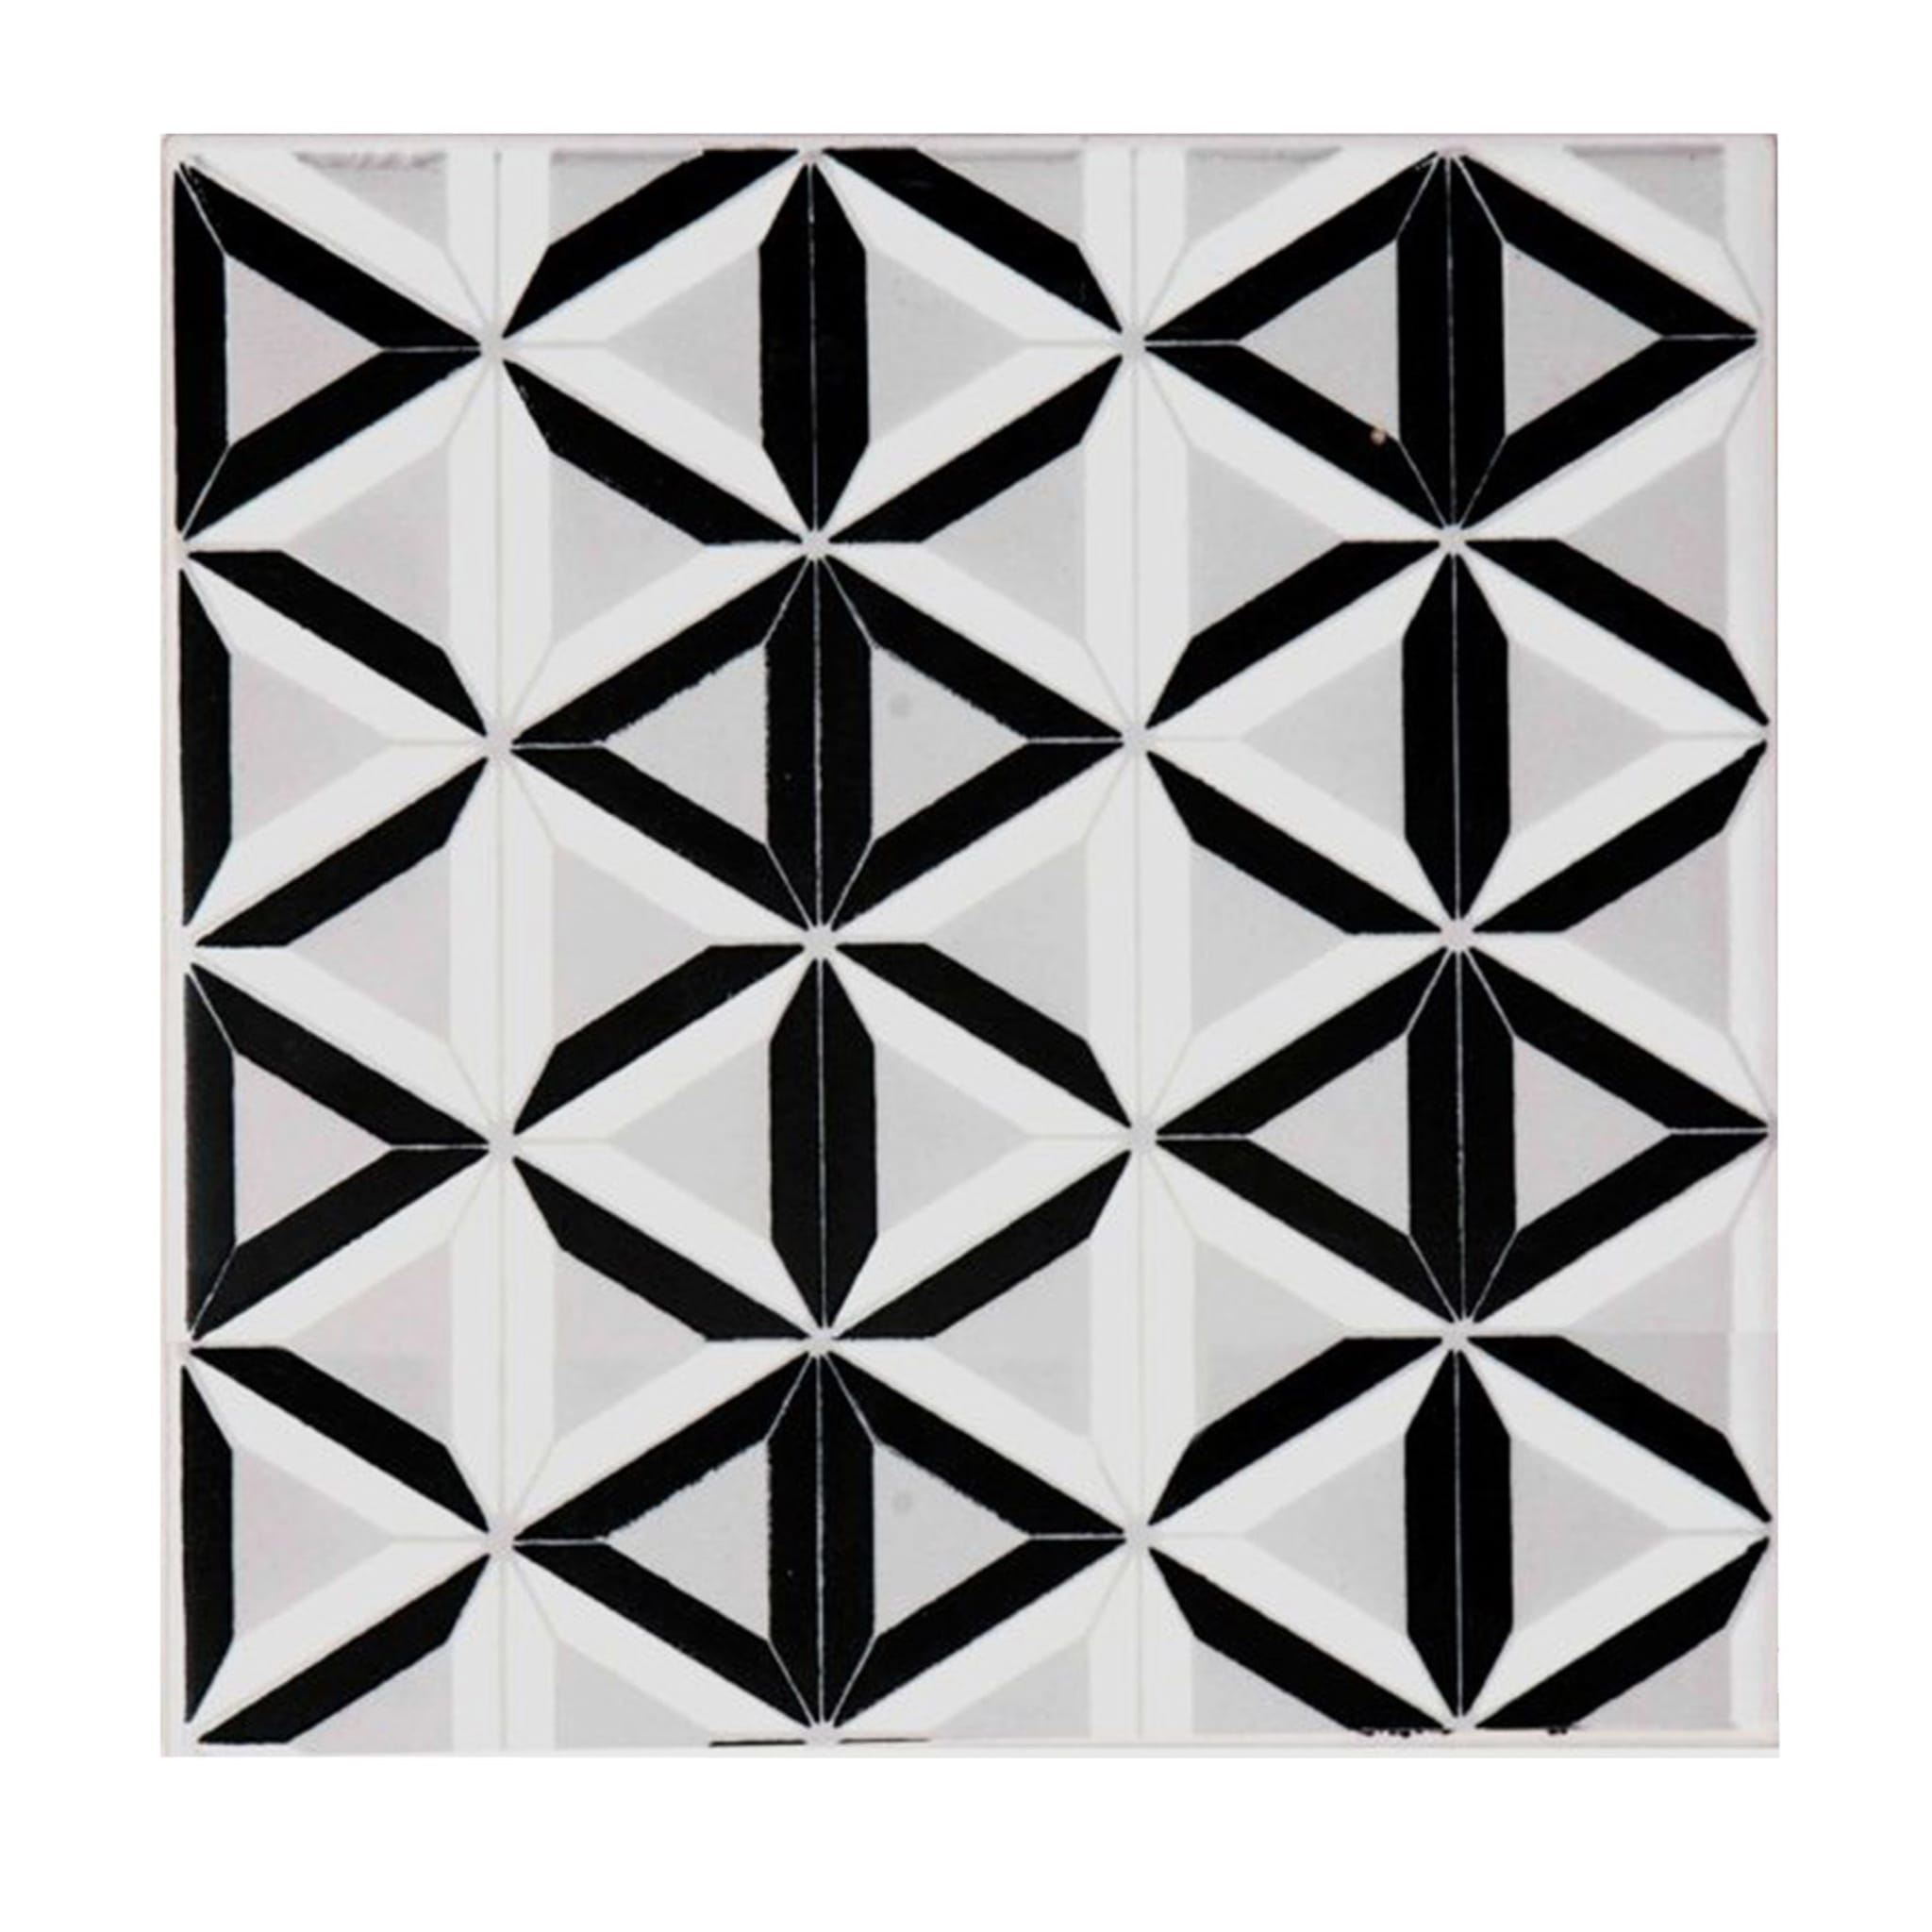 Geometric Trend C44 #3 Black & White Set of 25 Square Tiles - Main view